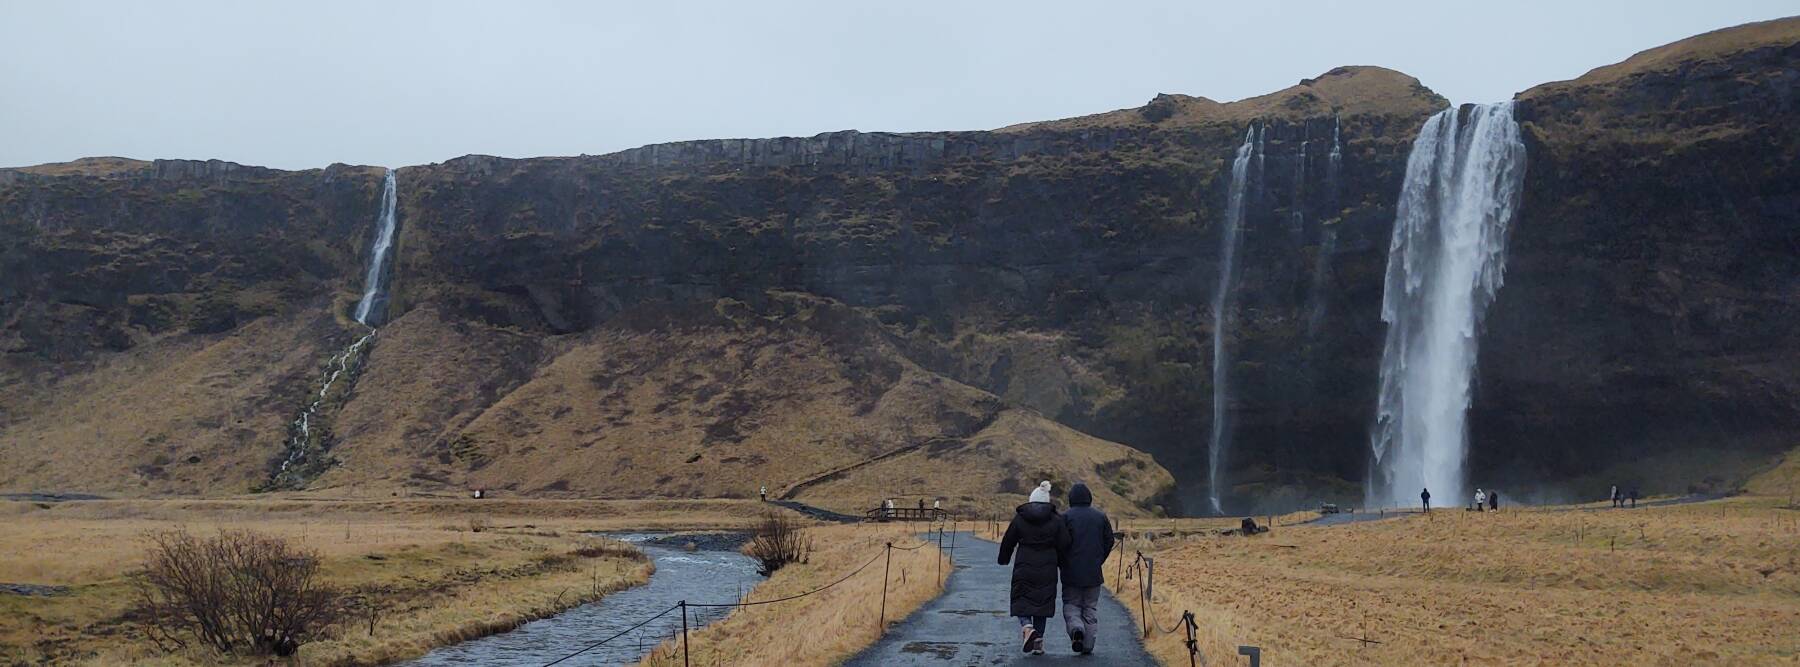 Waterfalls at Seljalandsfoss in southern Iceland.